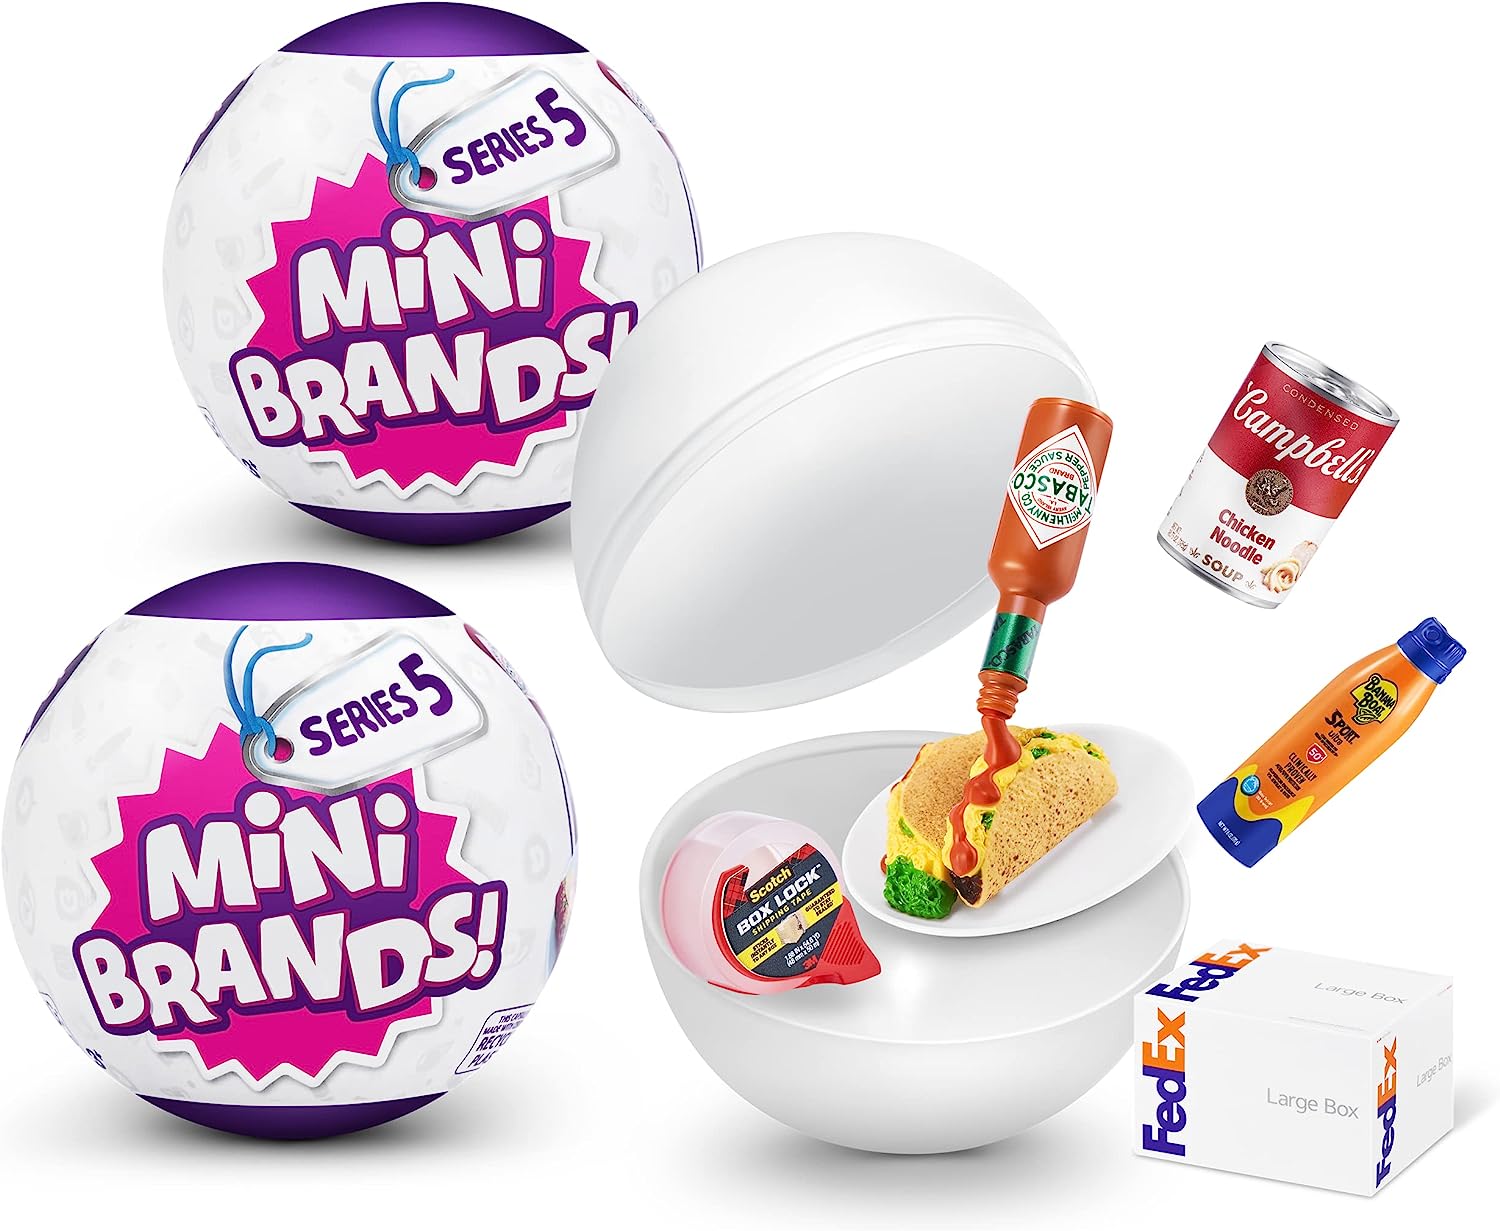 Toy Mini Brands [Mini Toy Shop] Unboxing!!! Zuru 5 Surprise Toy Mini Brands  2021 